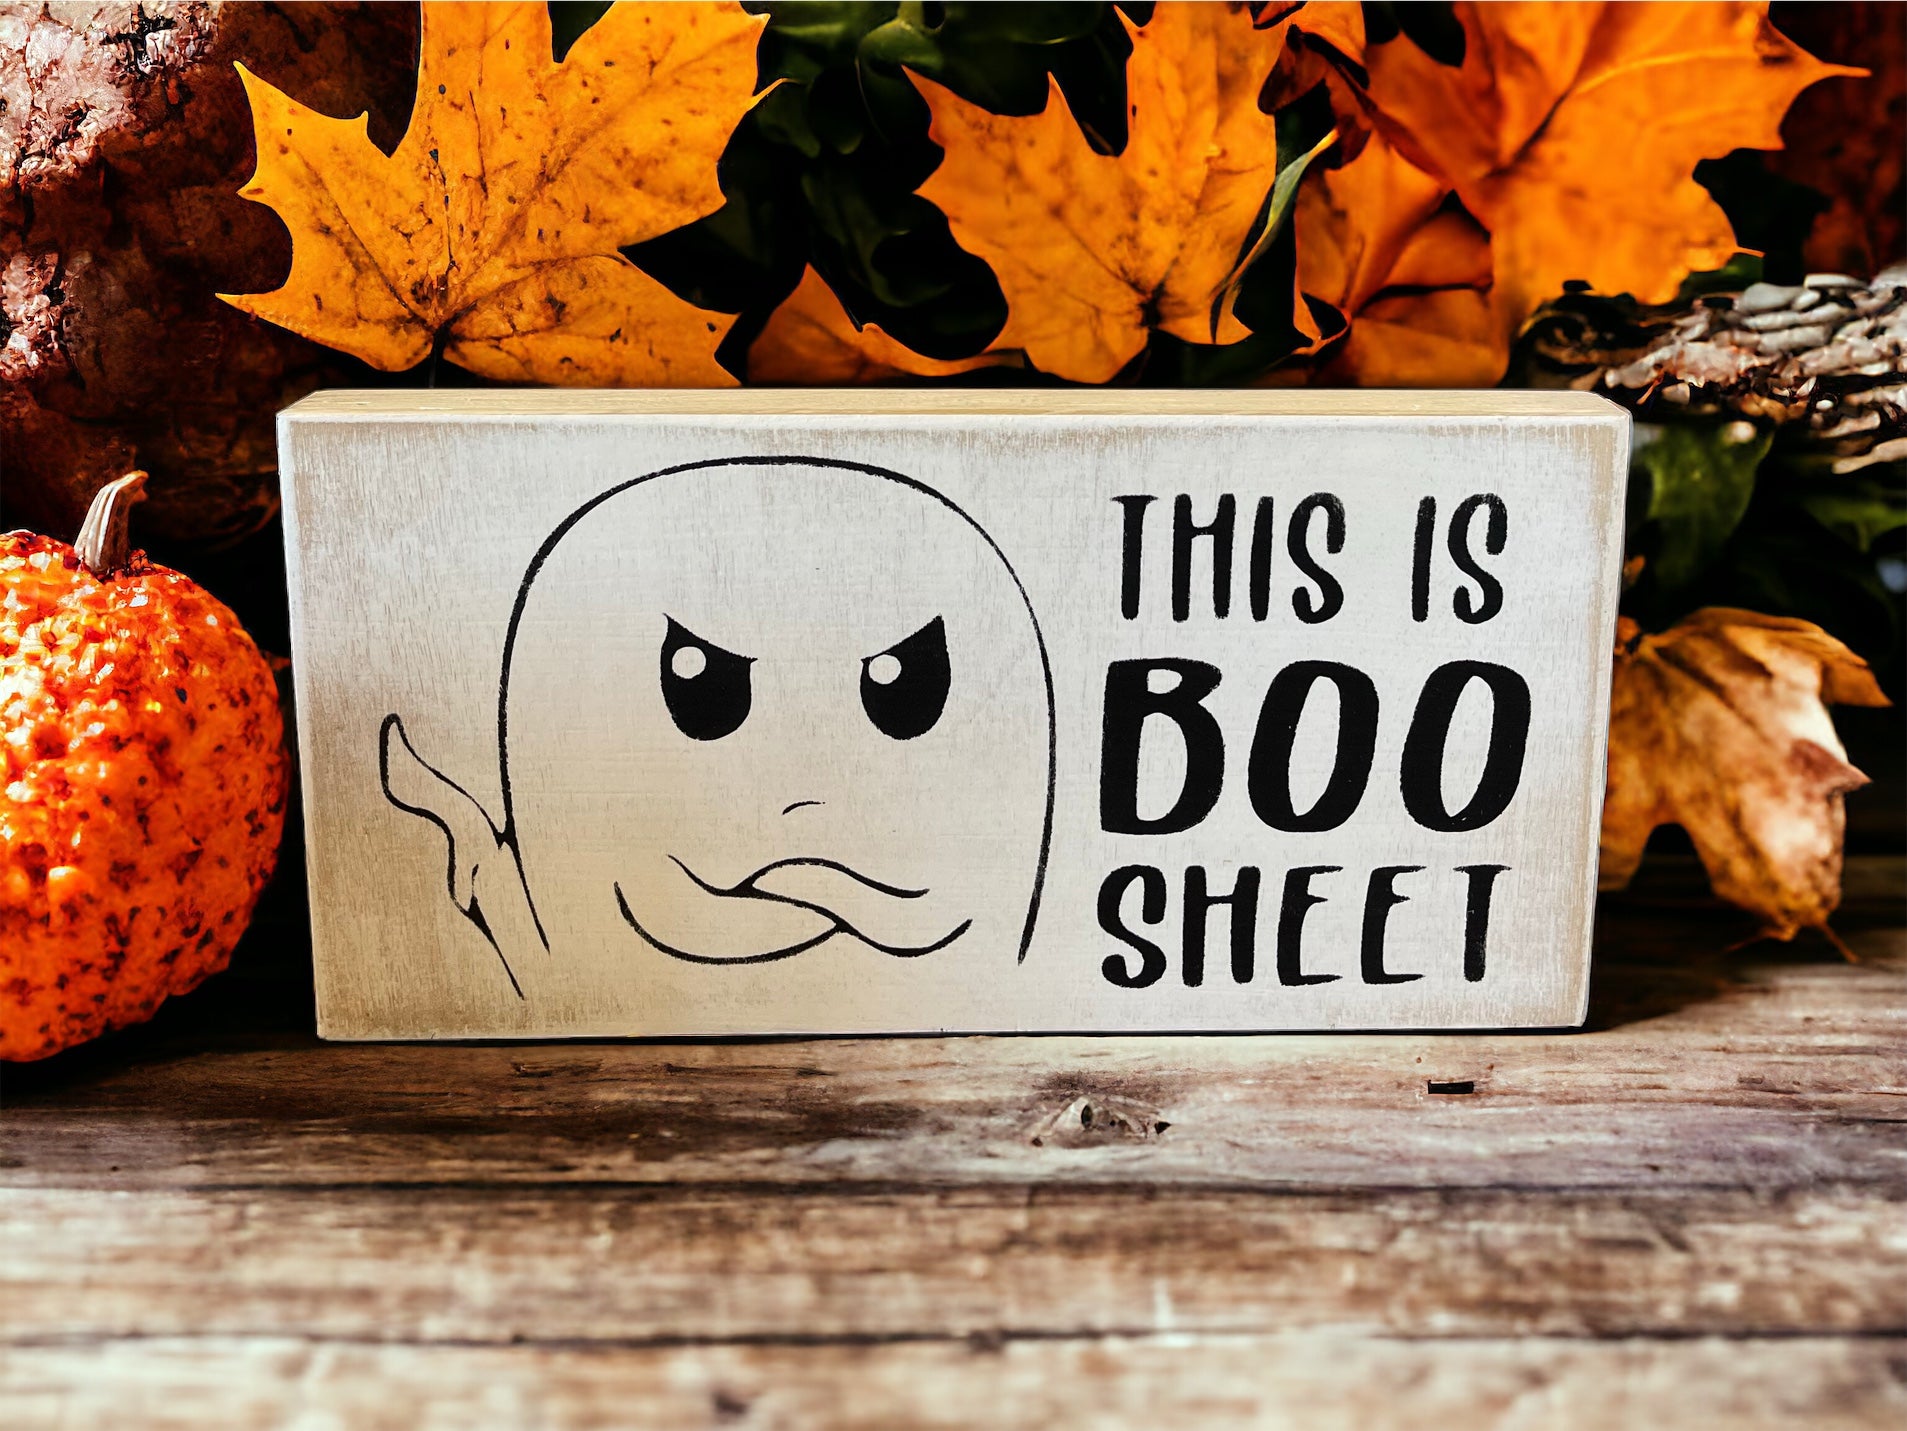 "Boo sheet" wood sign